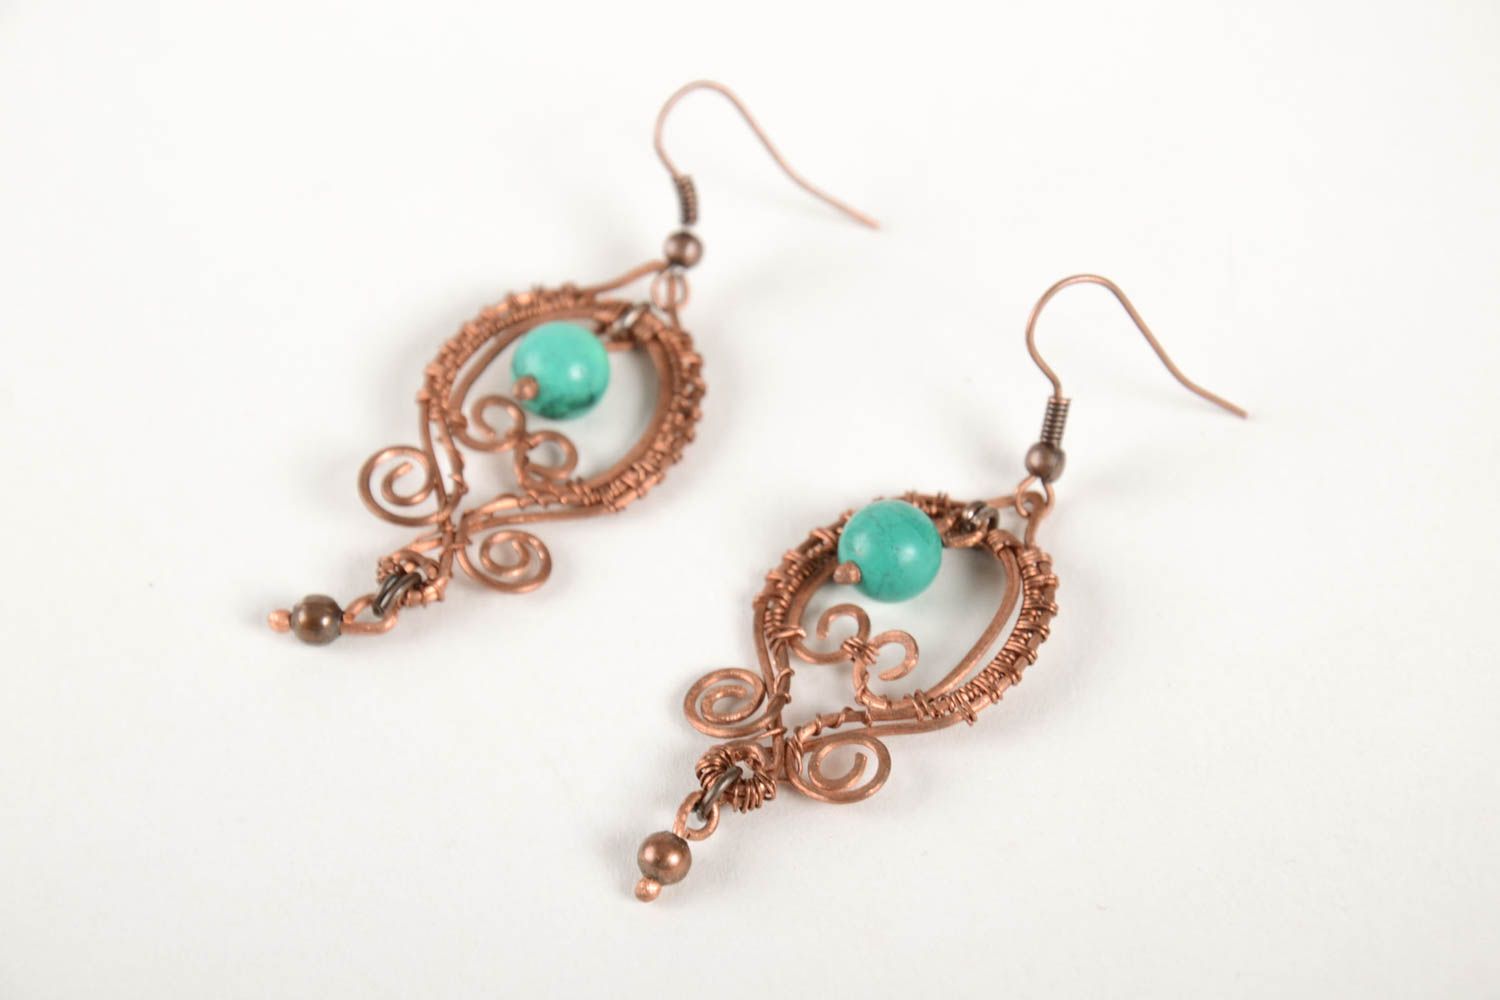 Handmade beautiful festive earrings stylish earrings with charms vintage jewelry photo 5